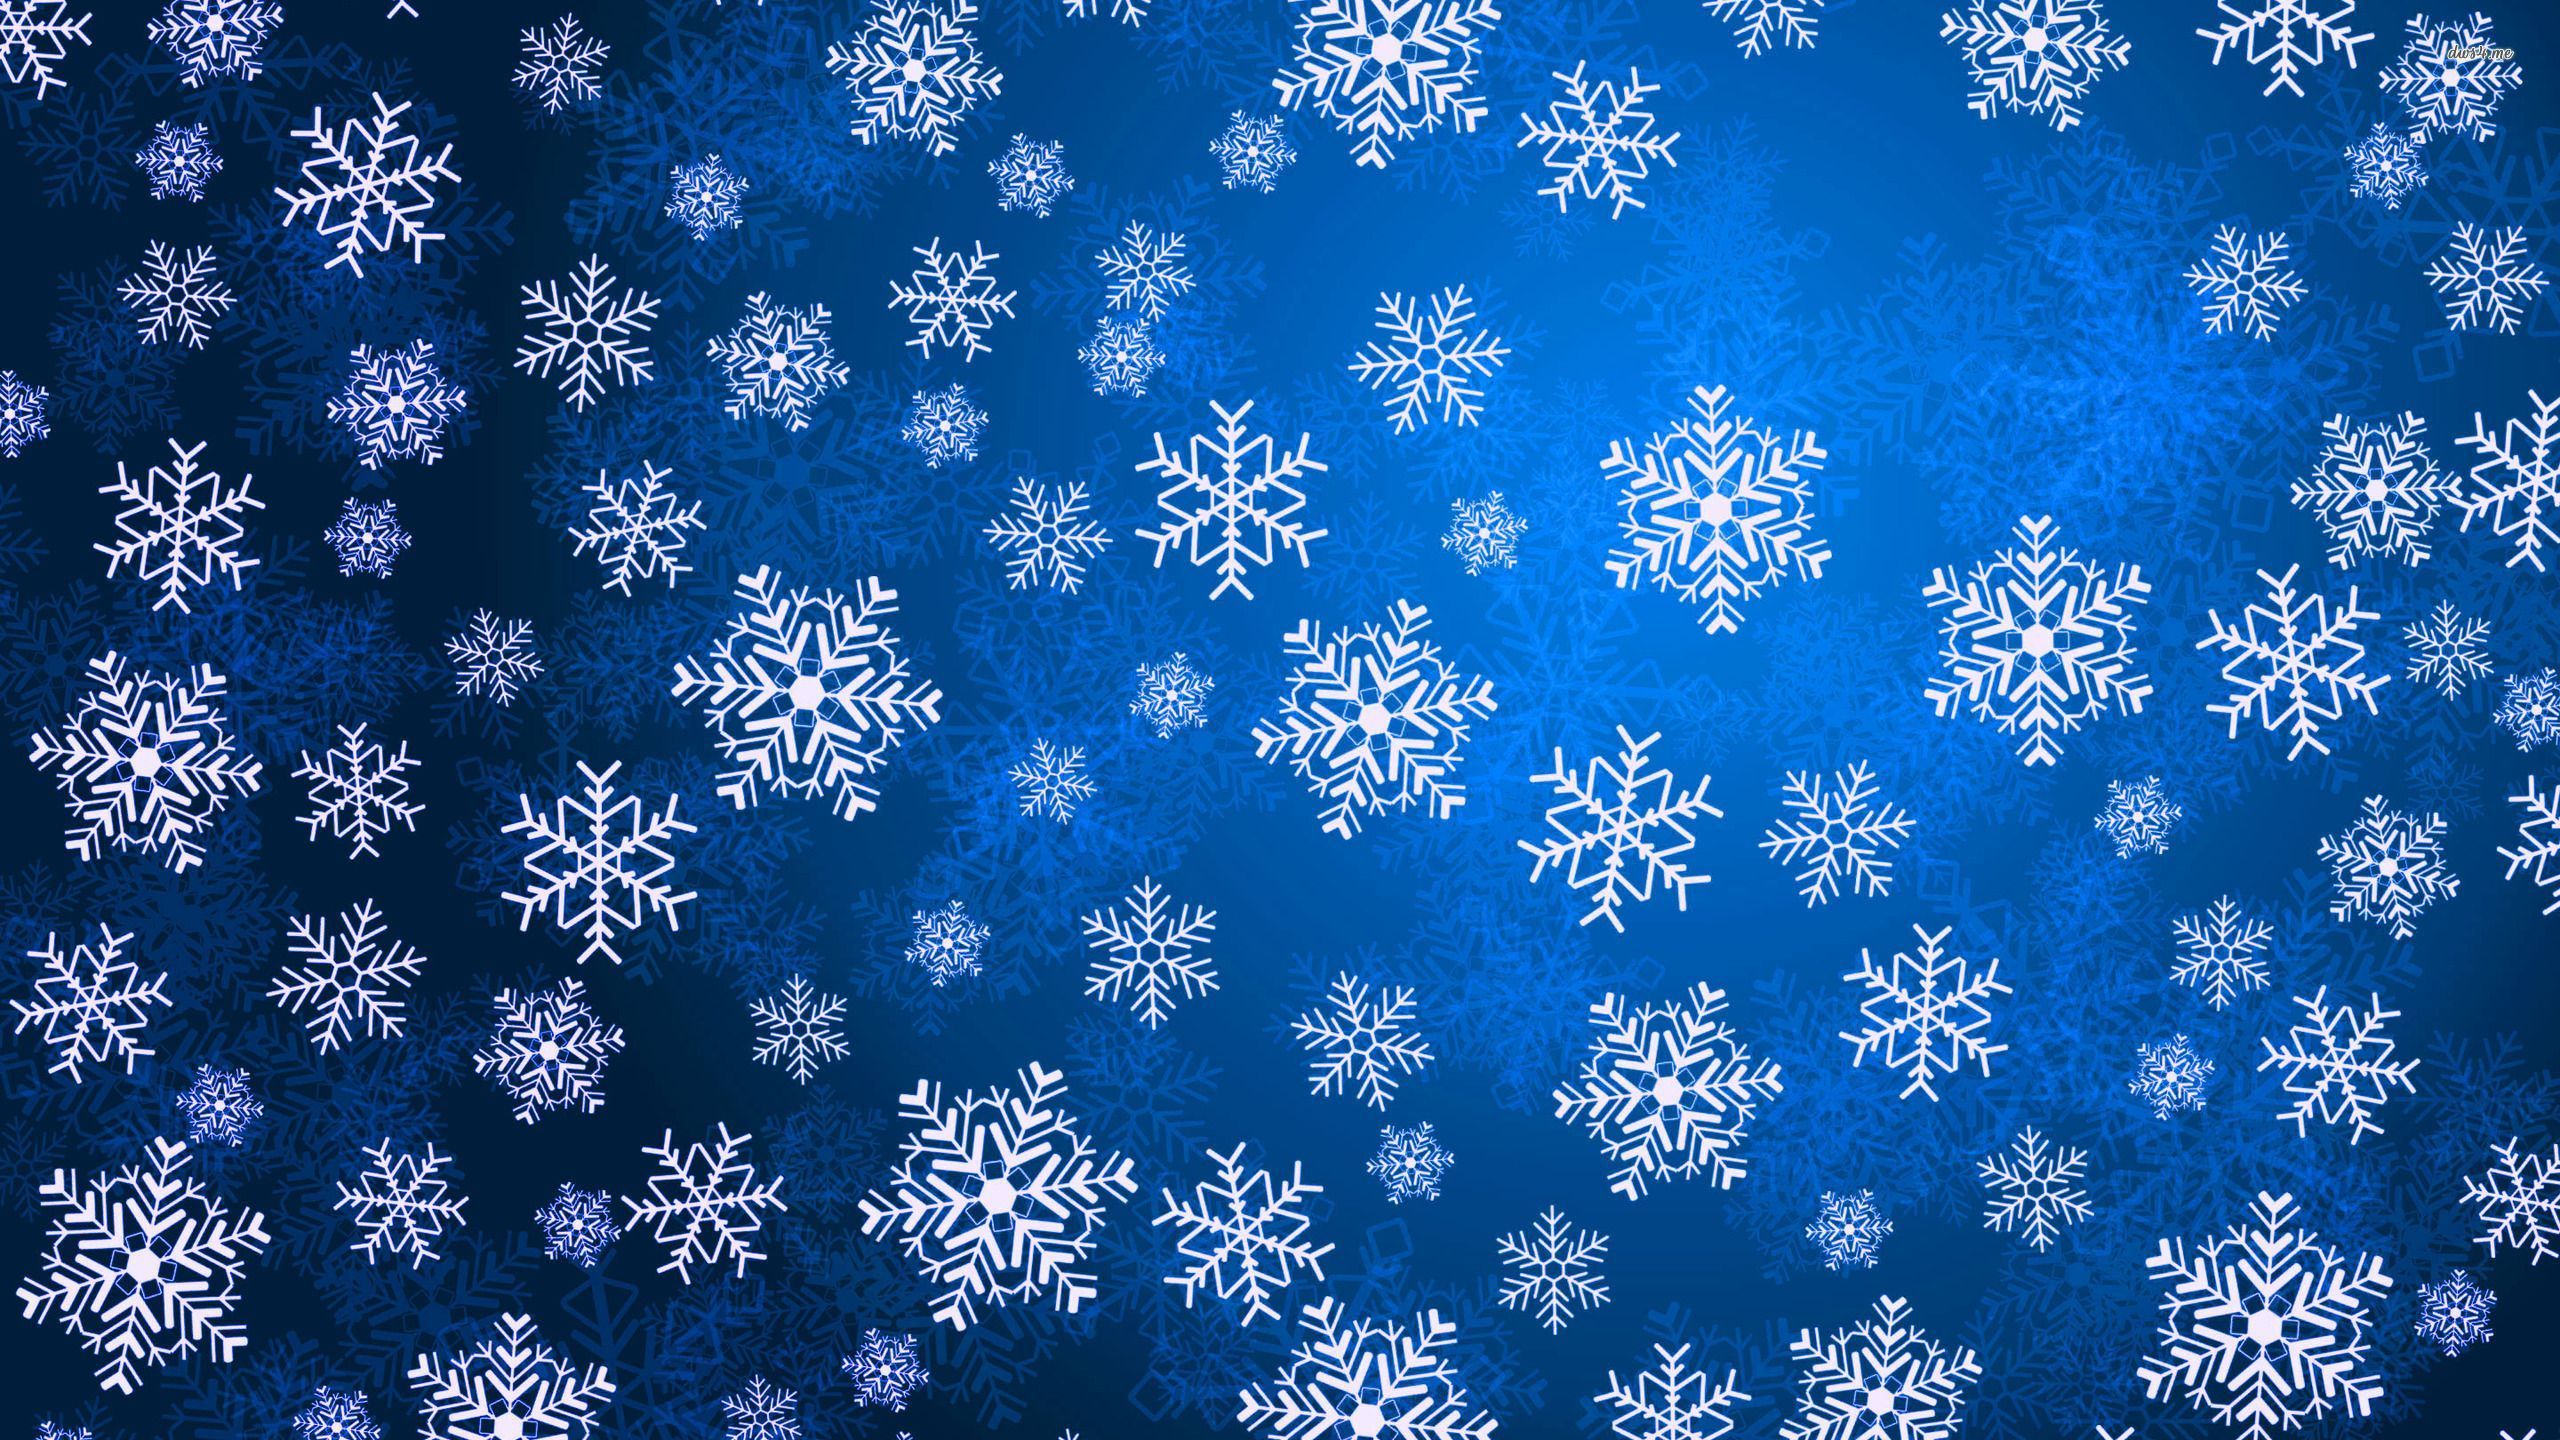 Snowflakes wallpaper - Vector wallpapers -